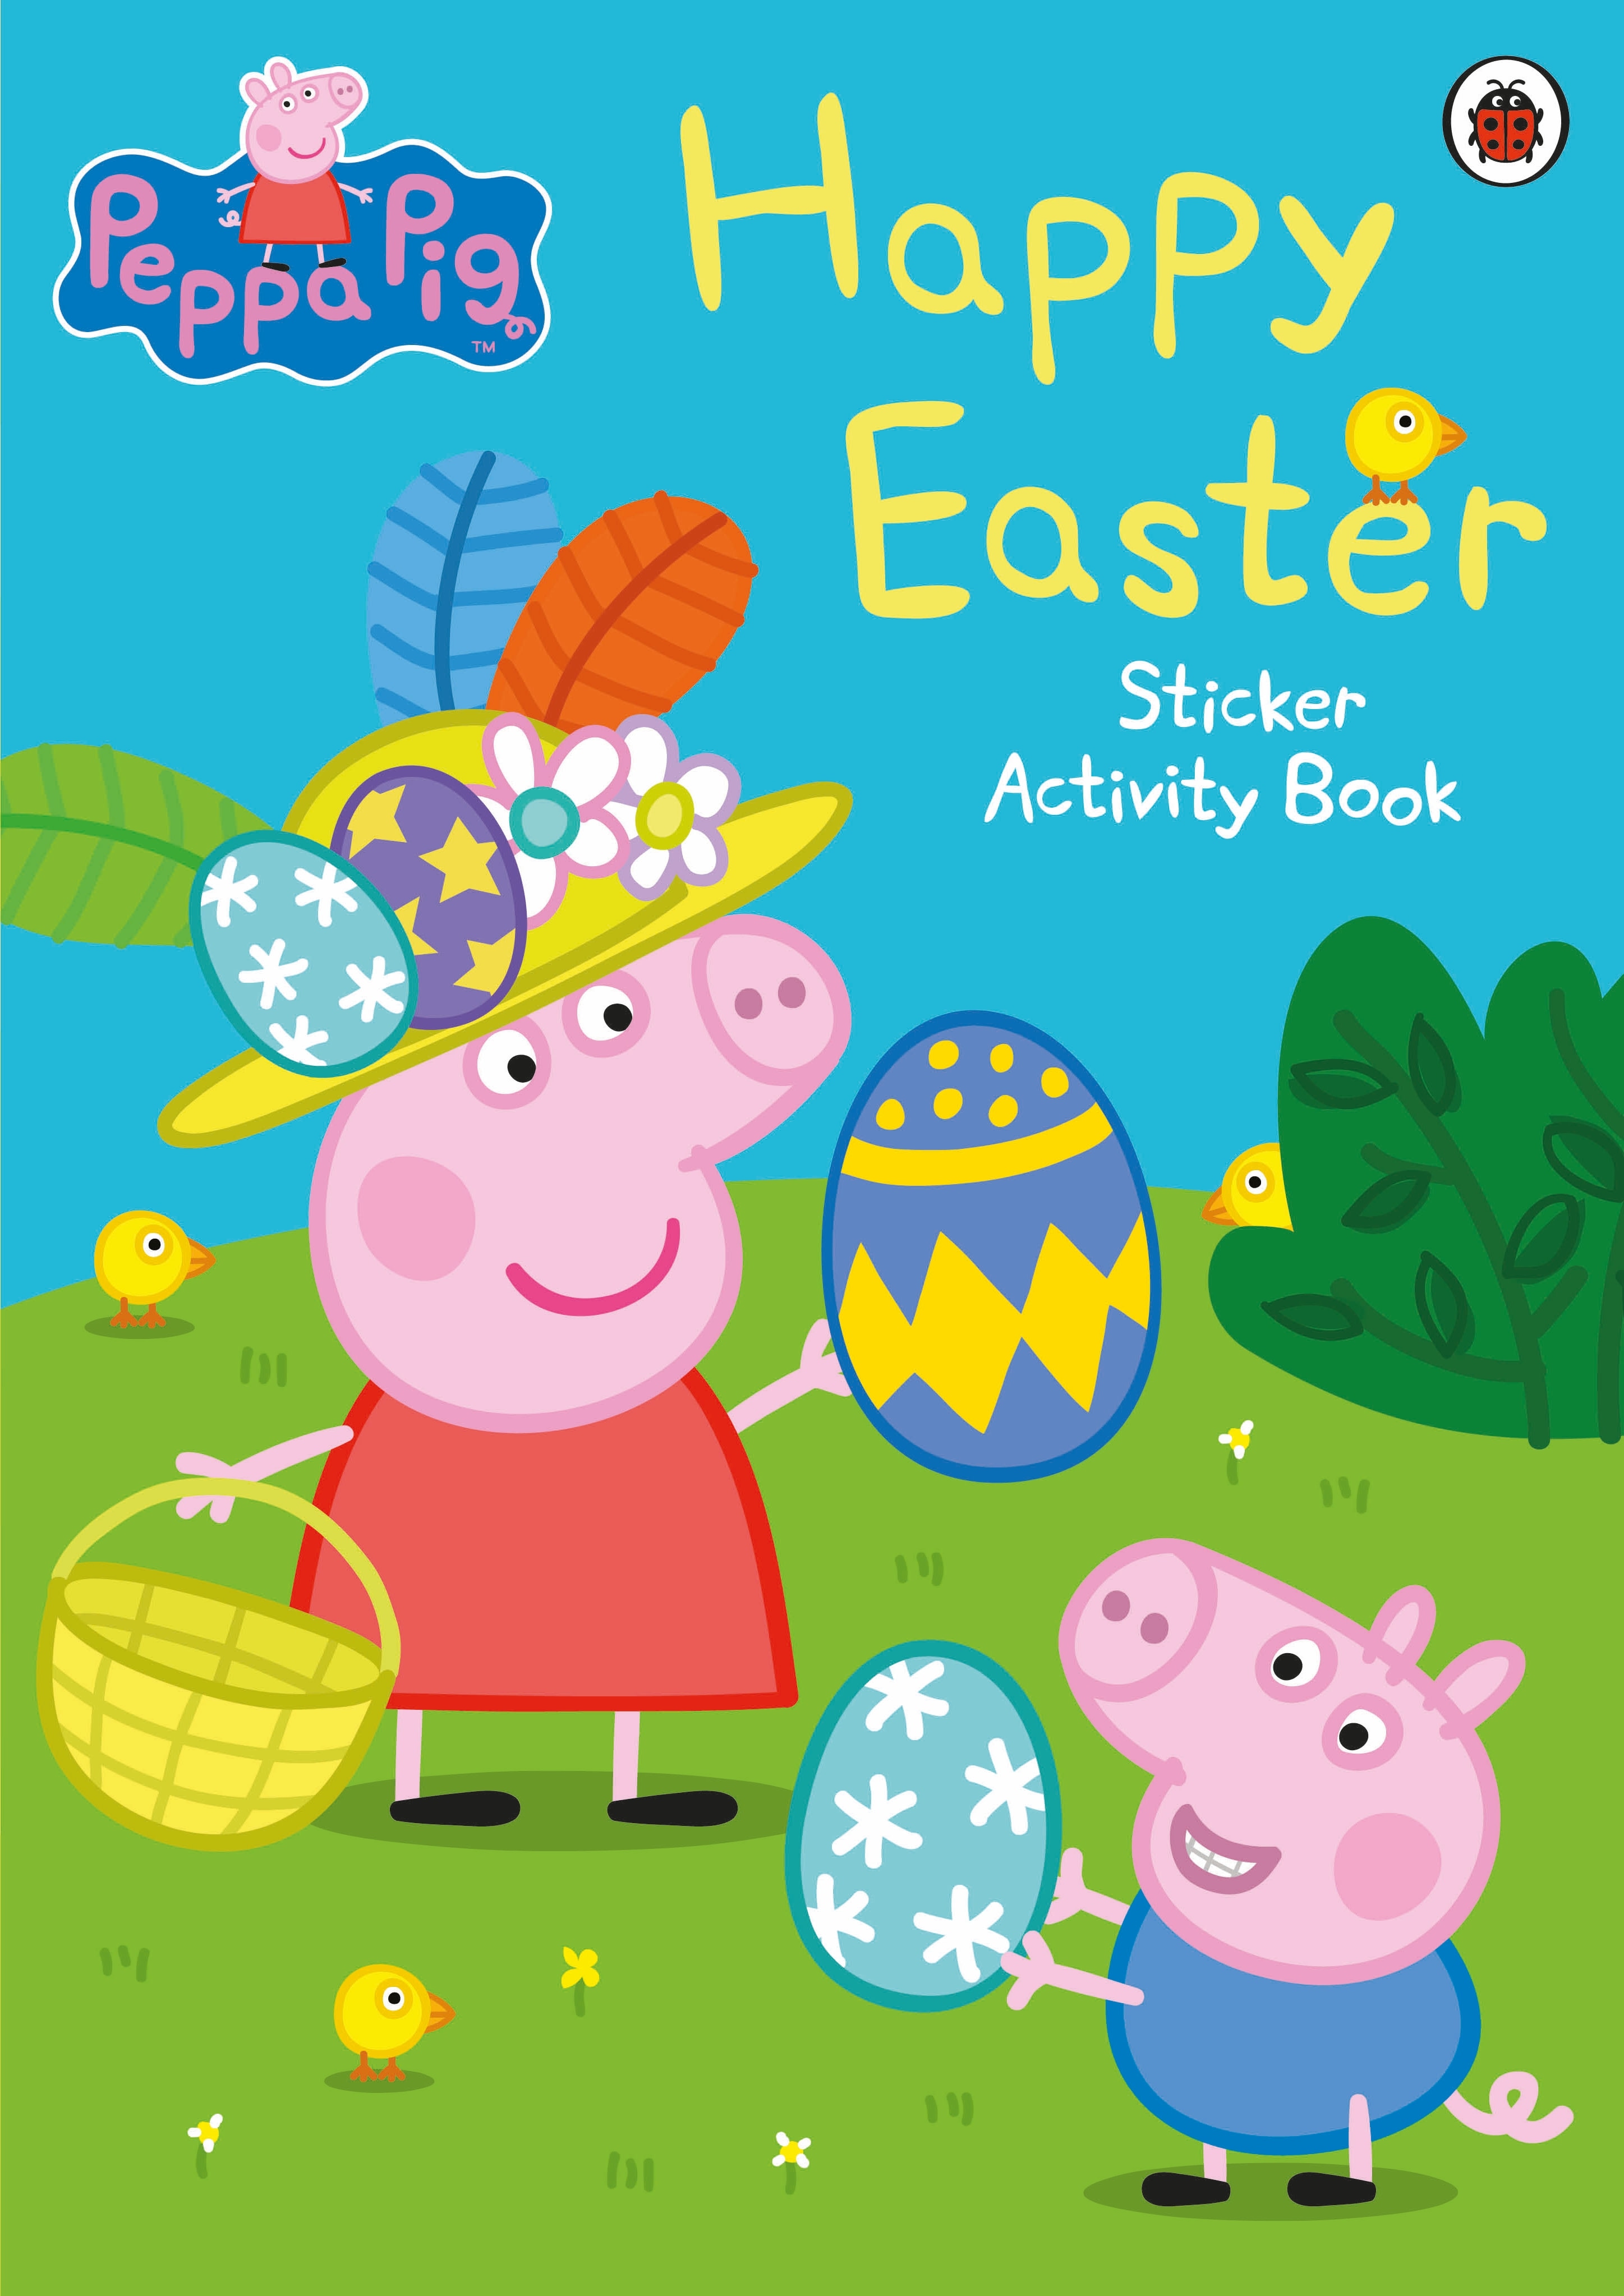 Book “Peppa Pig: Happy Easter” by Peppa Pig — February 4, 2016